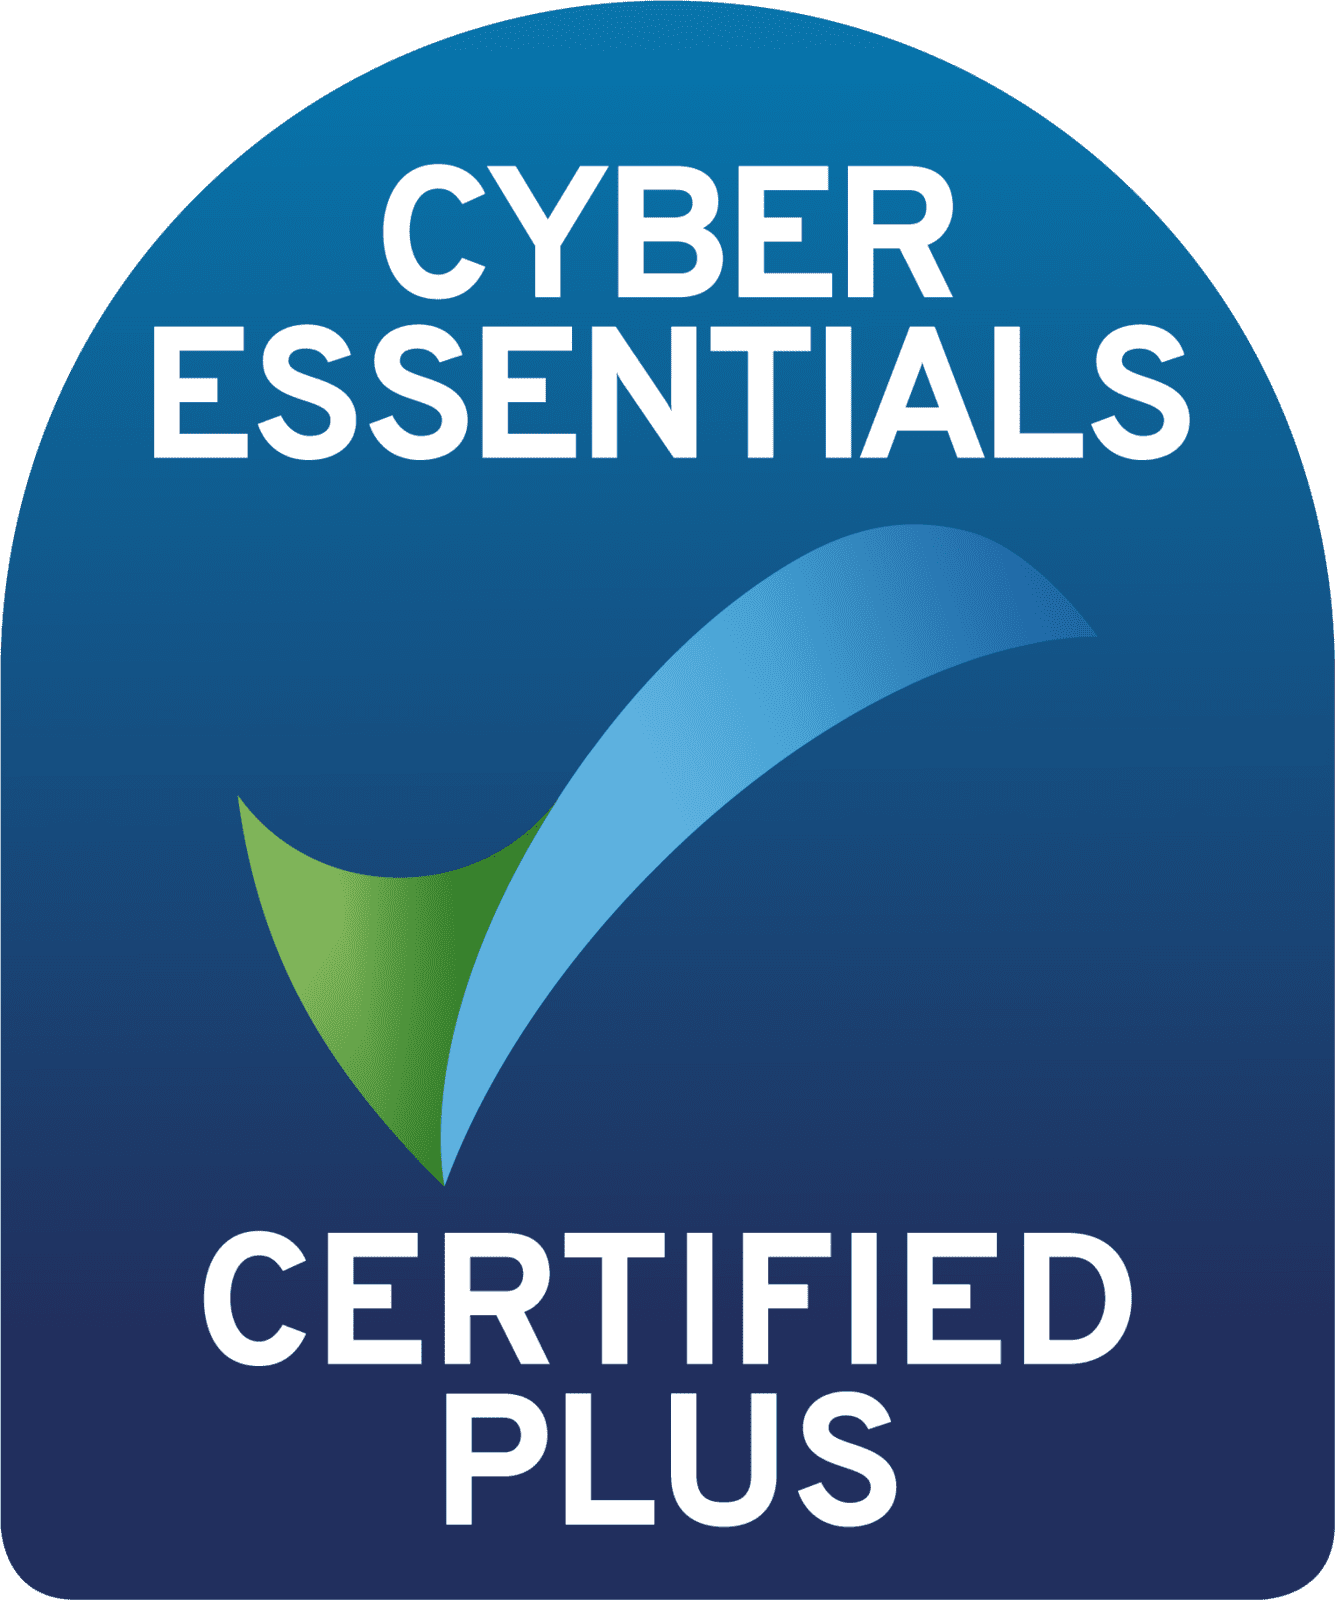 Cyber Essentials Certifies Plus Logo